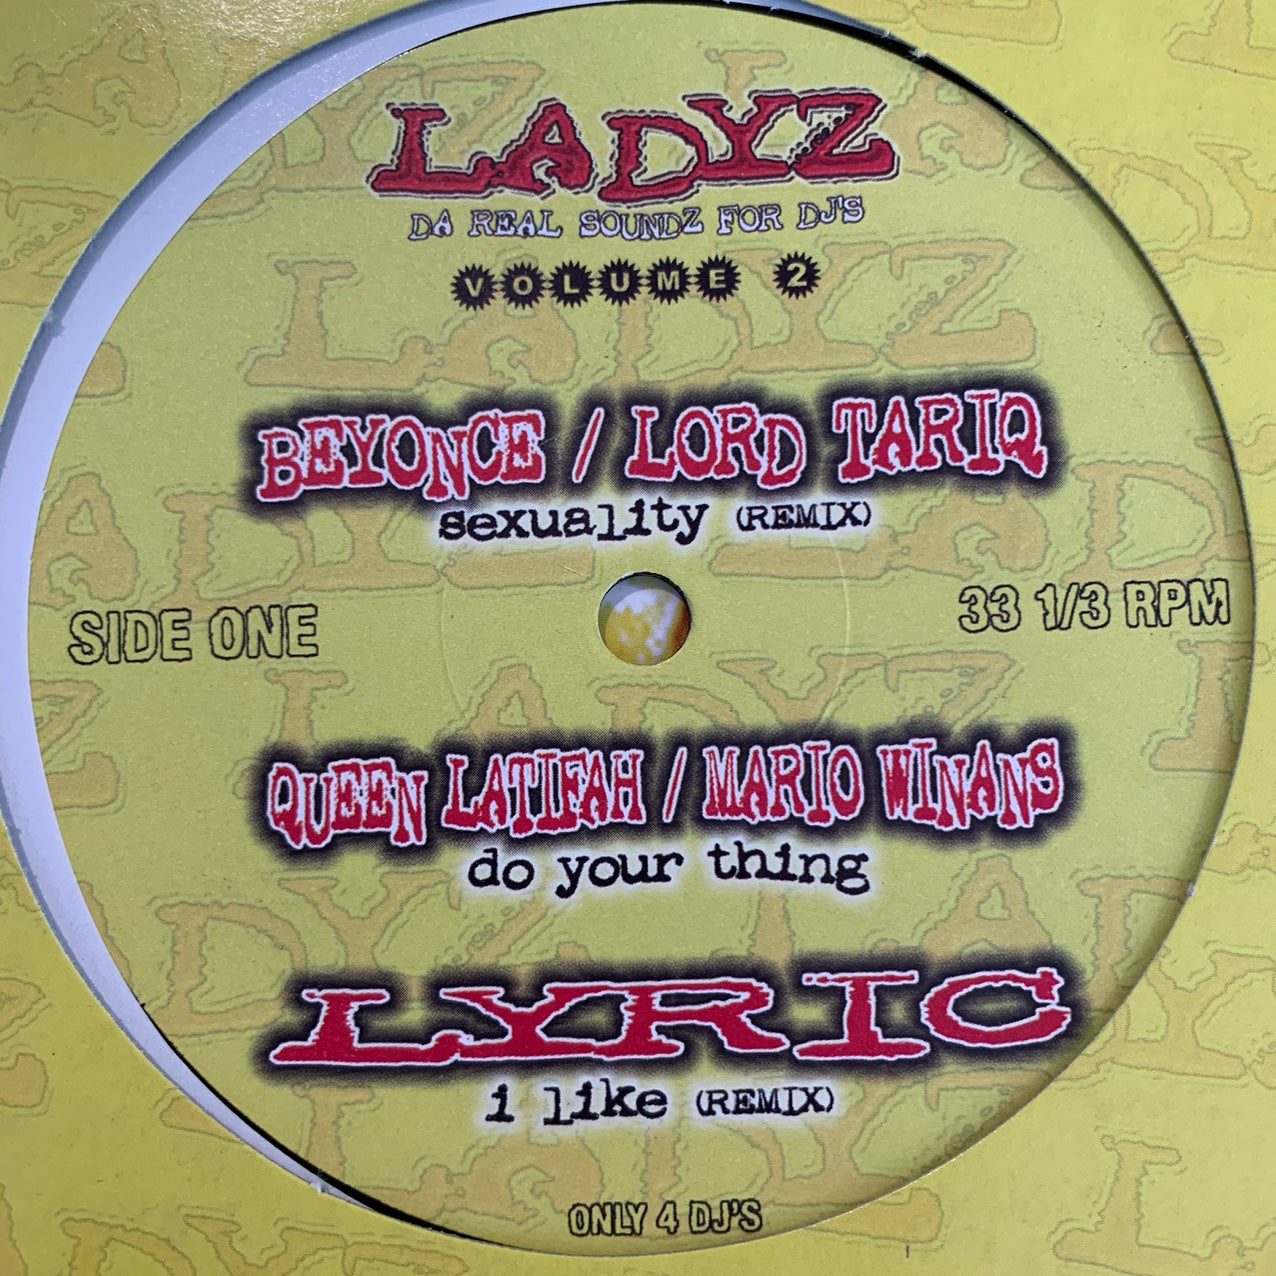 Ladyz Da Real Soundz For DJ’s Vol 2, 6 Track 12inch R&B Blends Vinyl Album Featuring Beyoncé, Lyric, Mis-Teeq, Da Brat, Queen Latifah and more